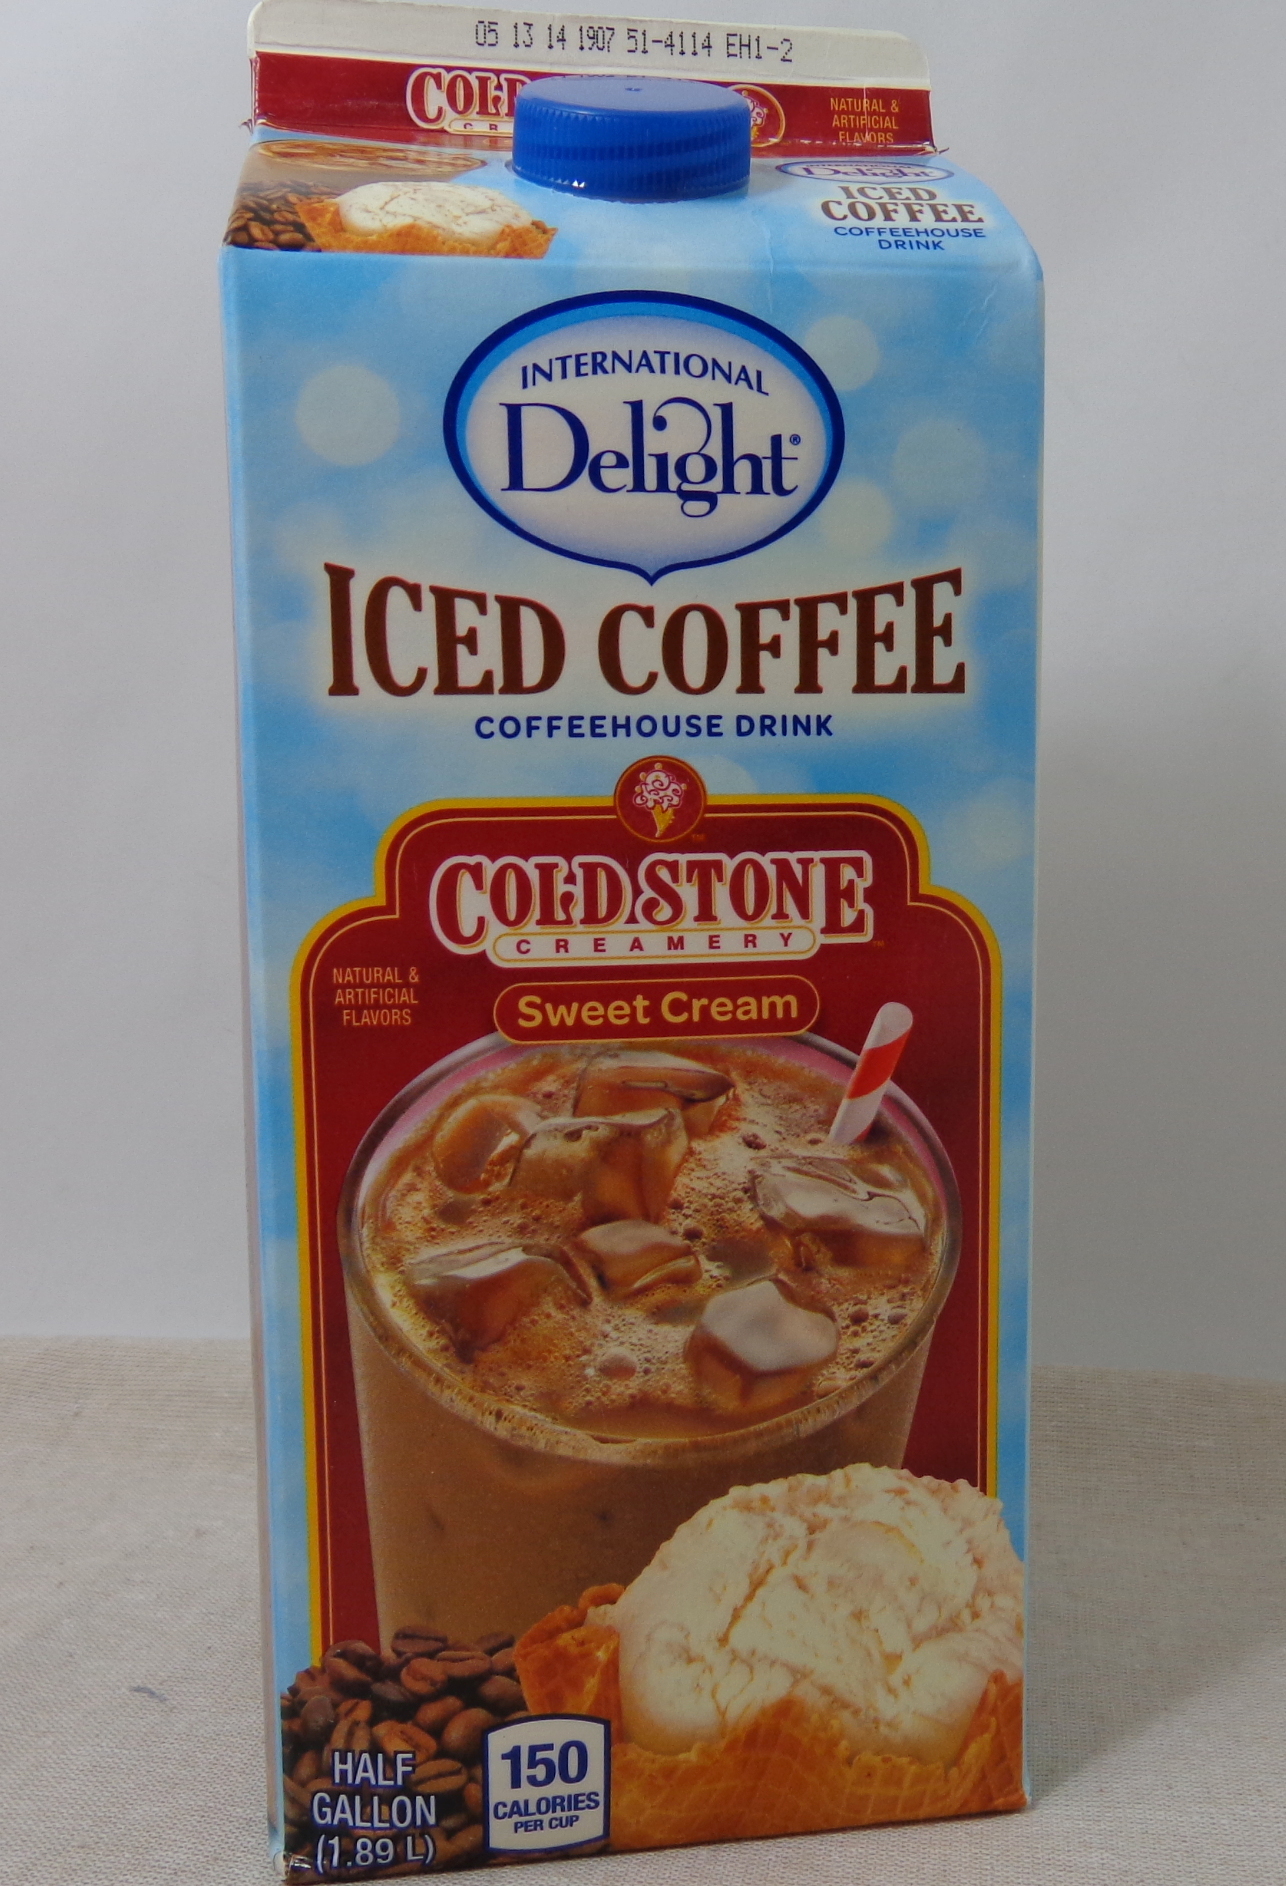 International Delight Iced Coffee Coldstone Creamery Sweet Cream My Highest Self